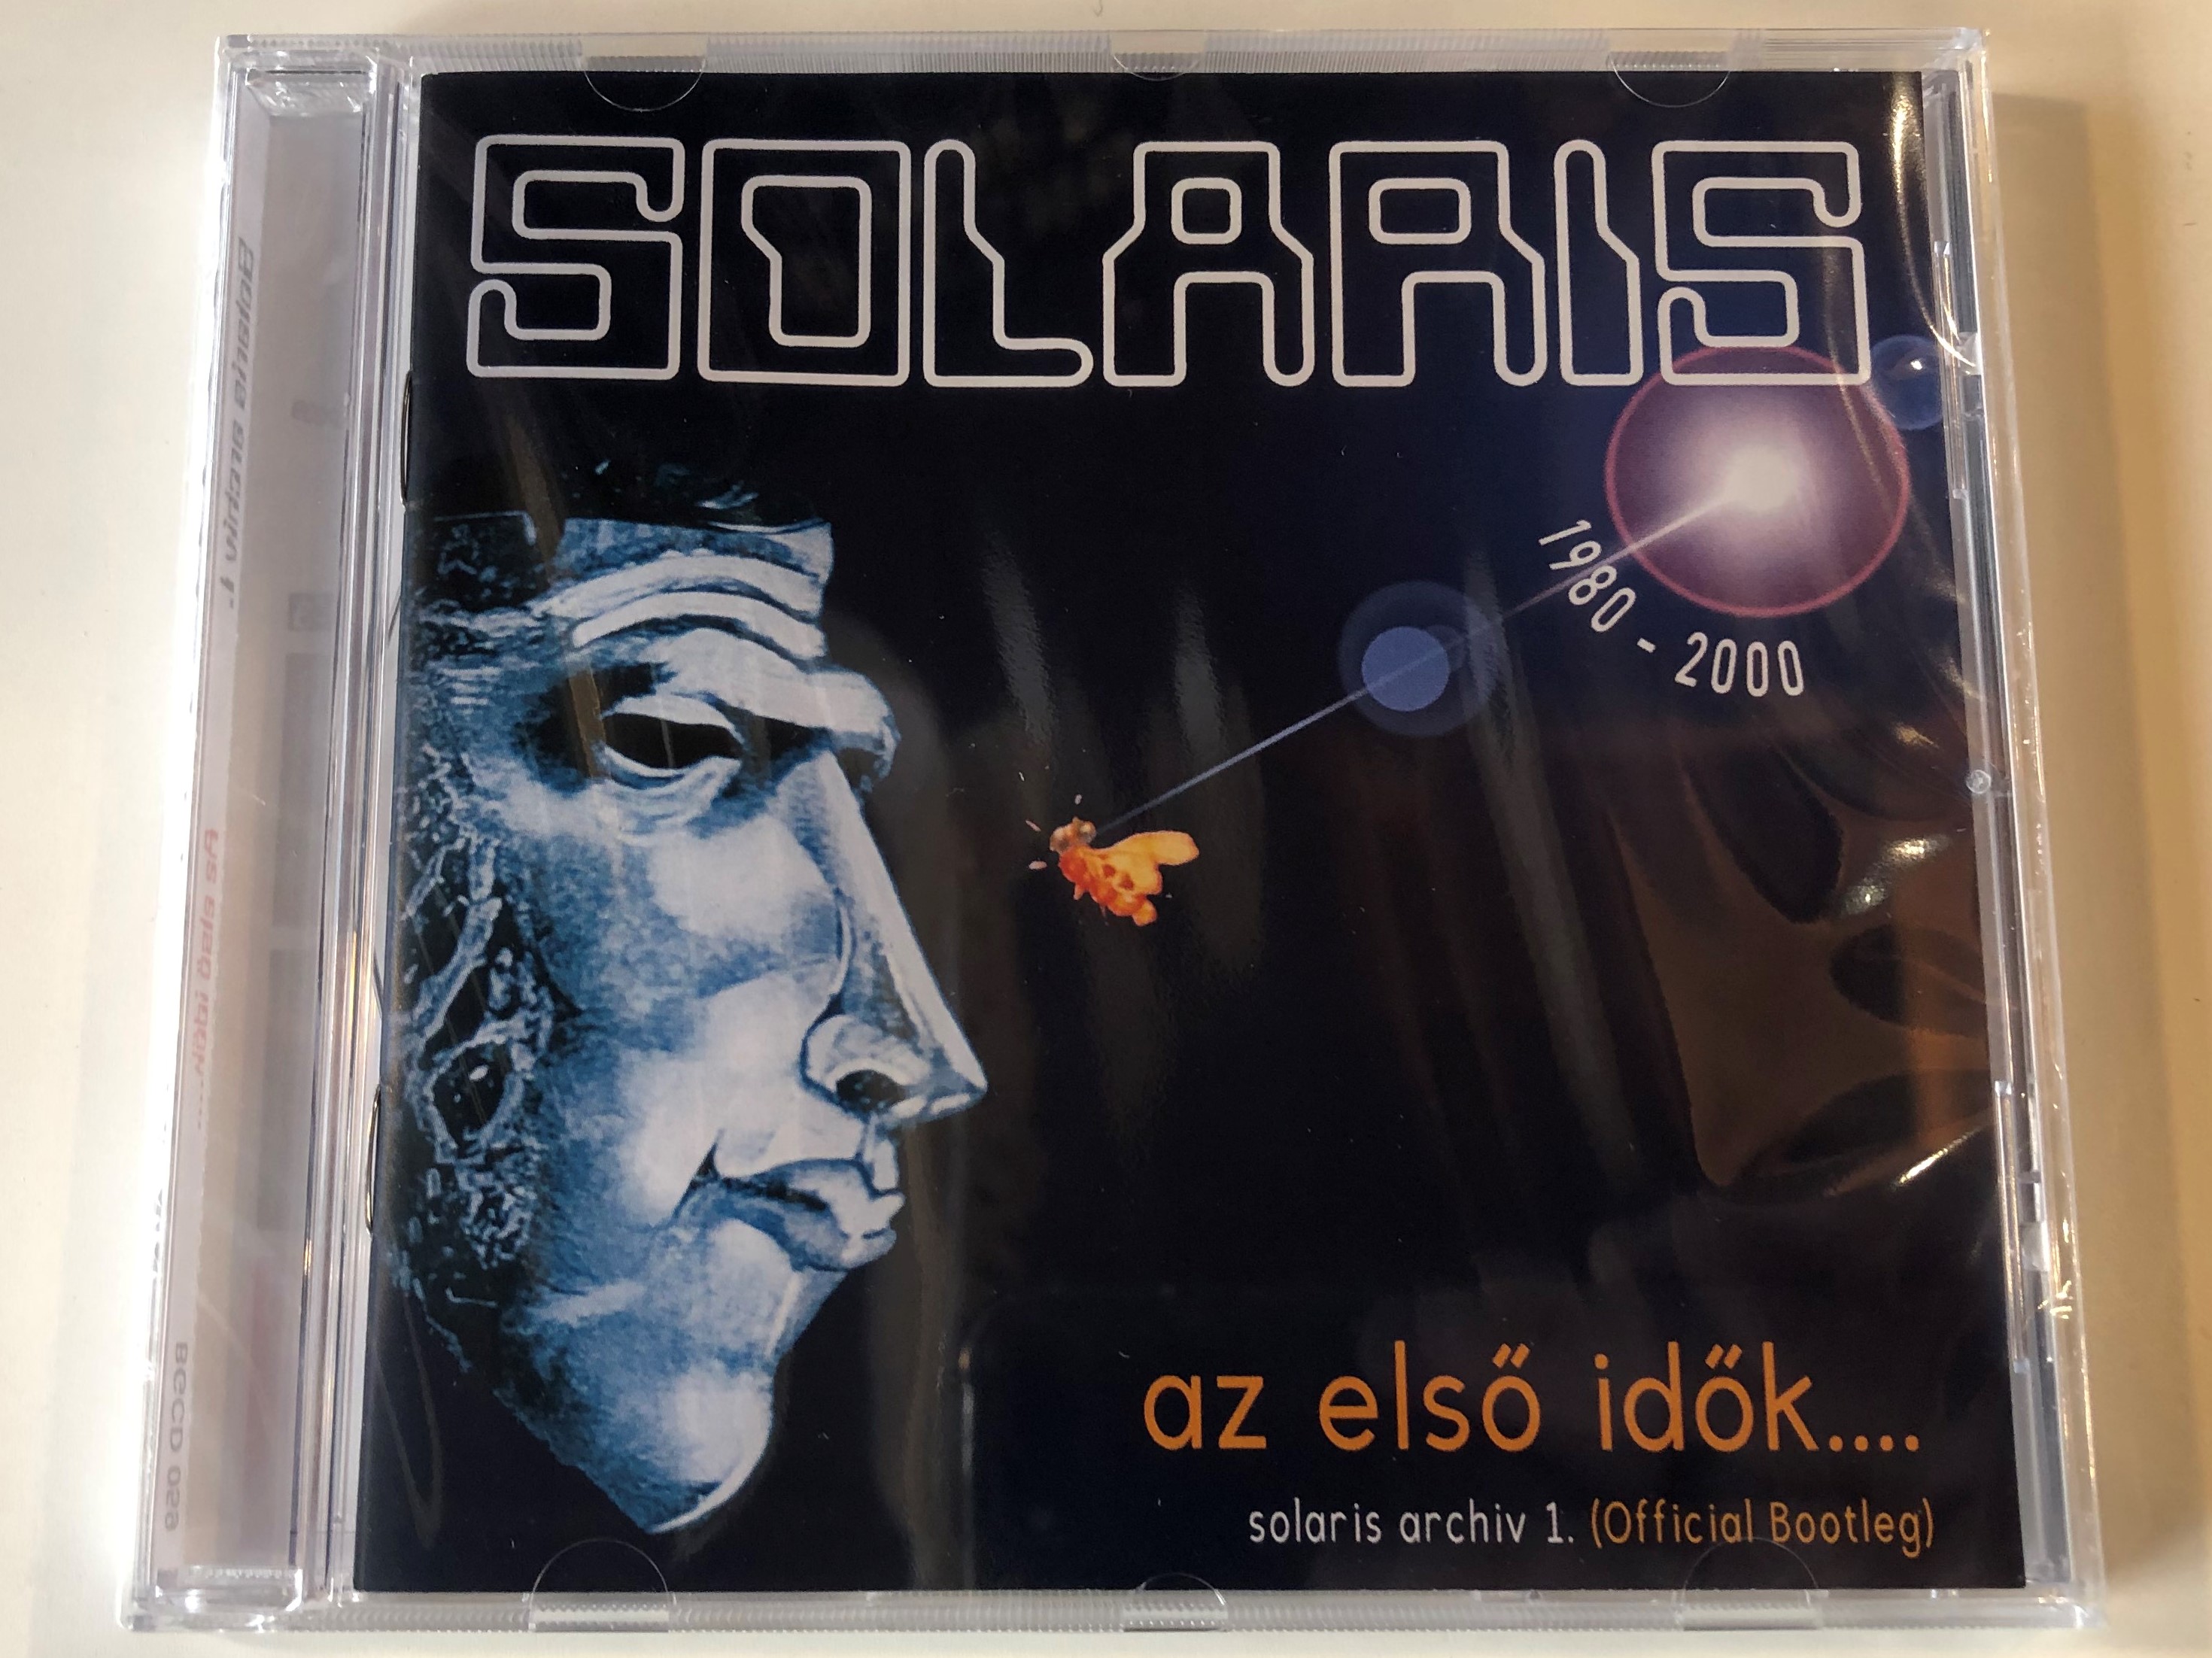 solaris-az-els-id-k...-1980-2000-solaris-archive-1.-official-bootleg-periferic-records-audio-cd-2000-bgcd-059-1-.jpg